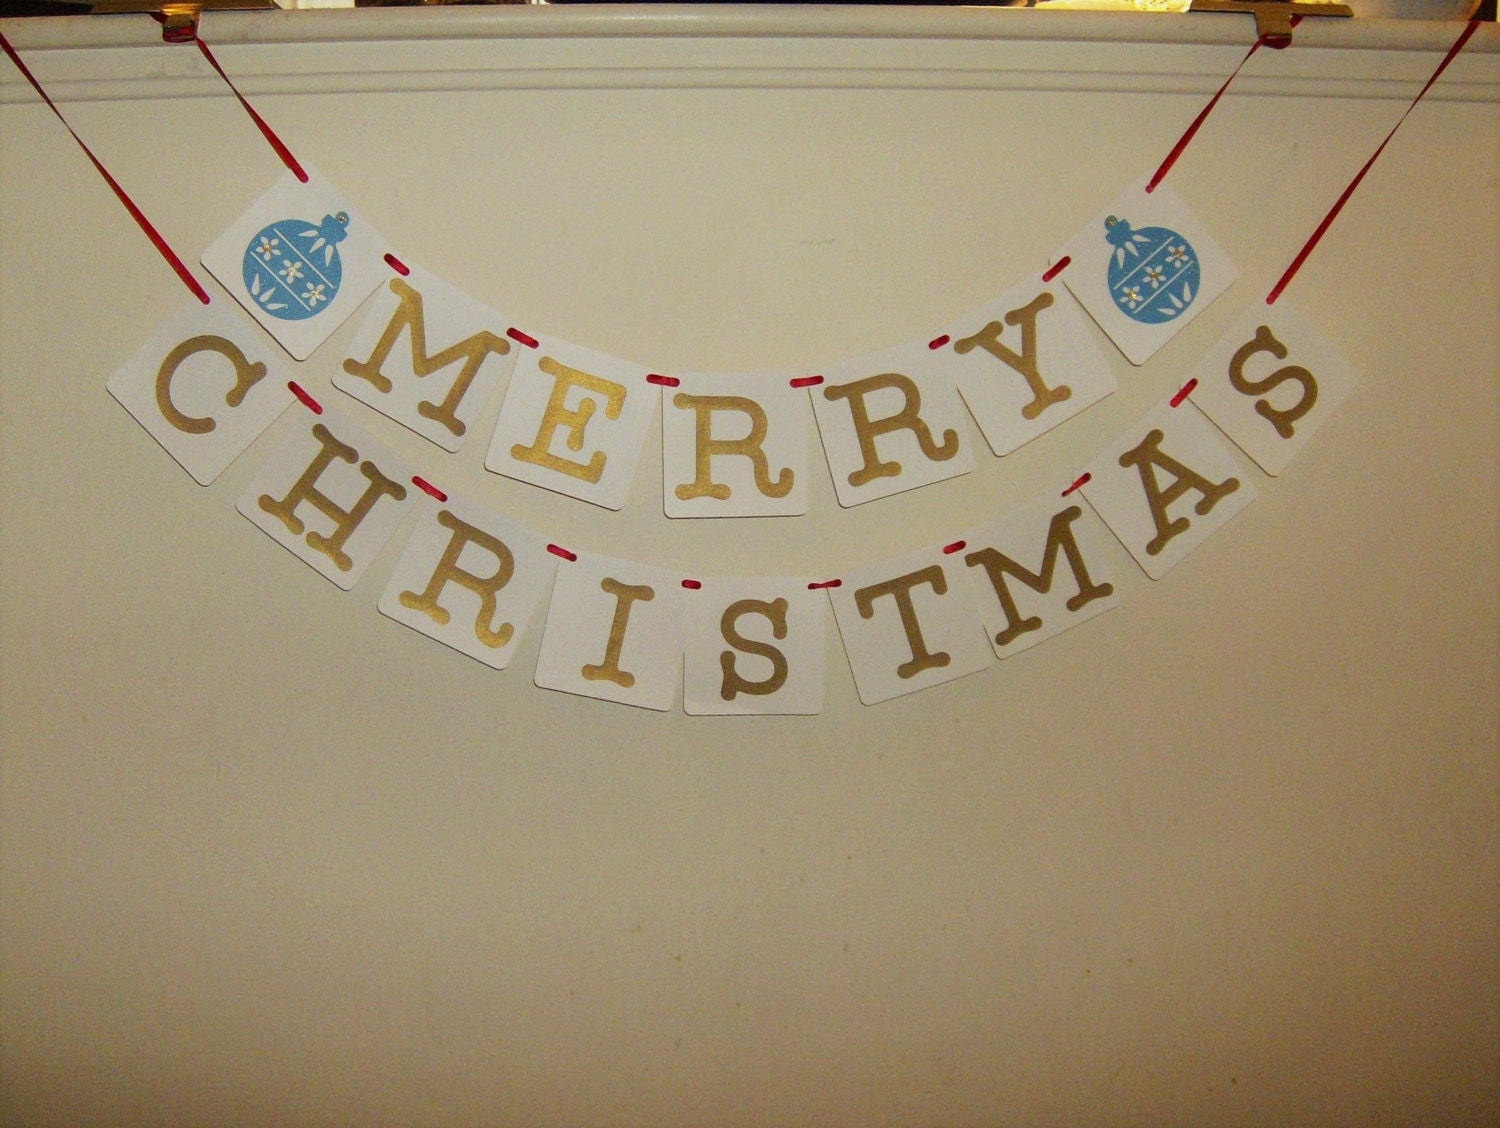 Merry Christmas Banner Christmas Holiday Greetings by TDesigns2